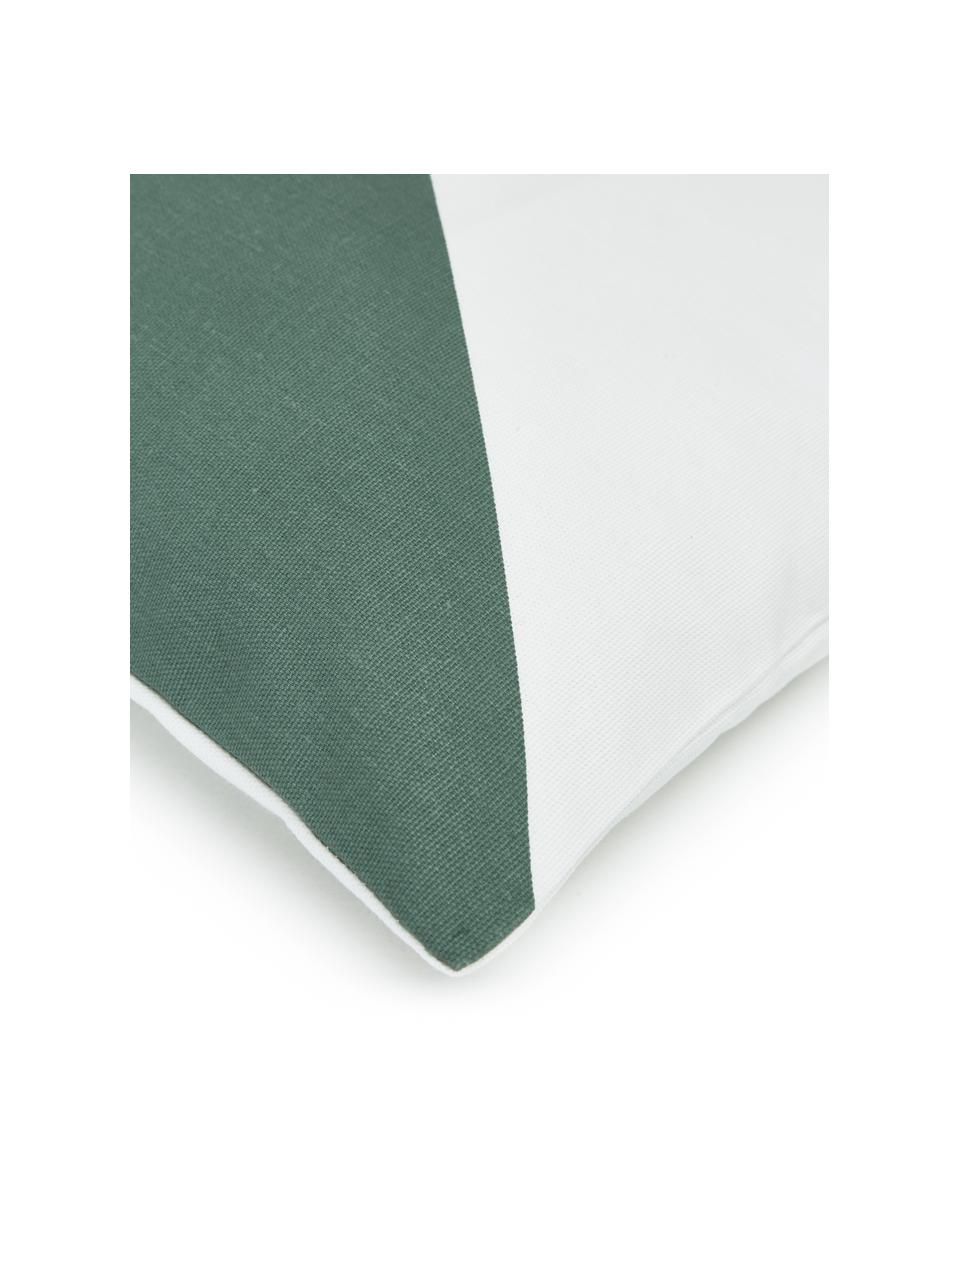 Funda de cojín estampada Ren, 100% algodón, Blanco, verde salvia, An 30 x L 50 cm